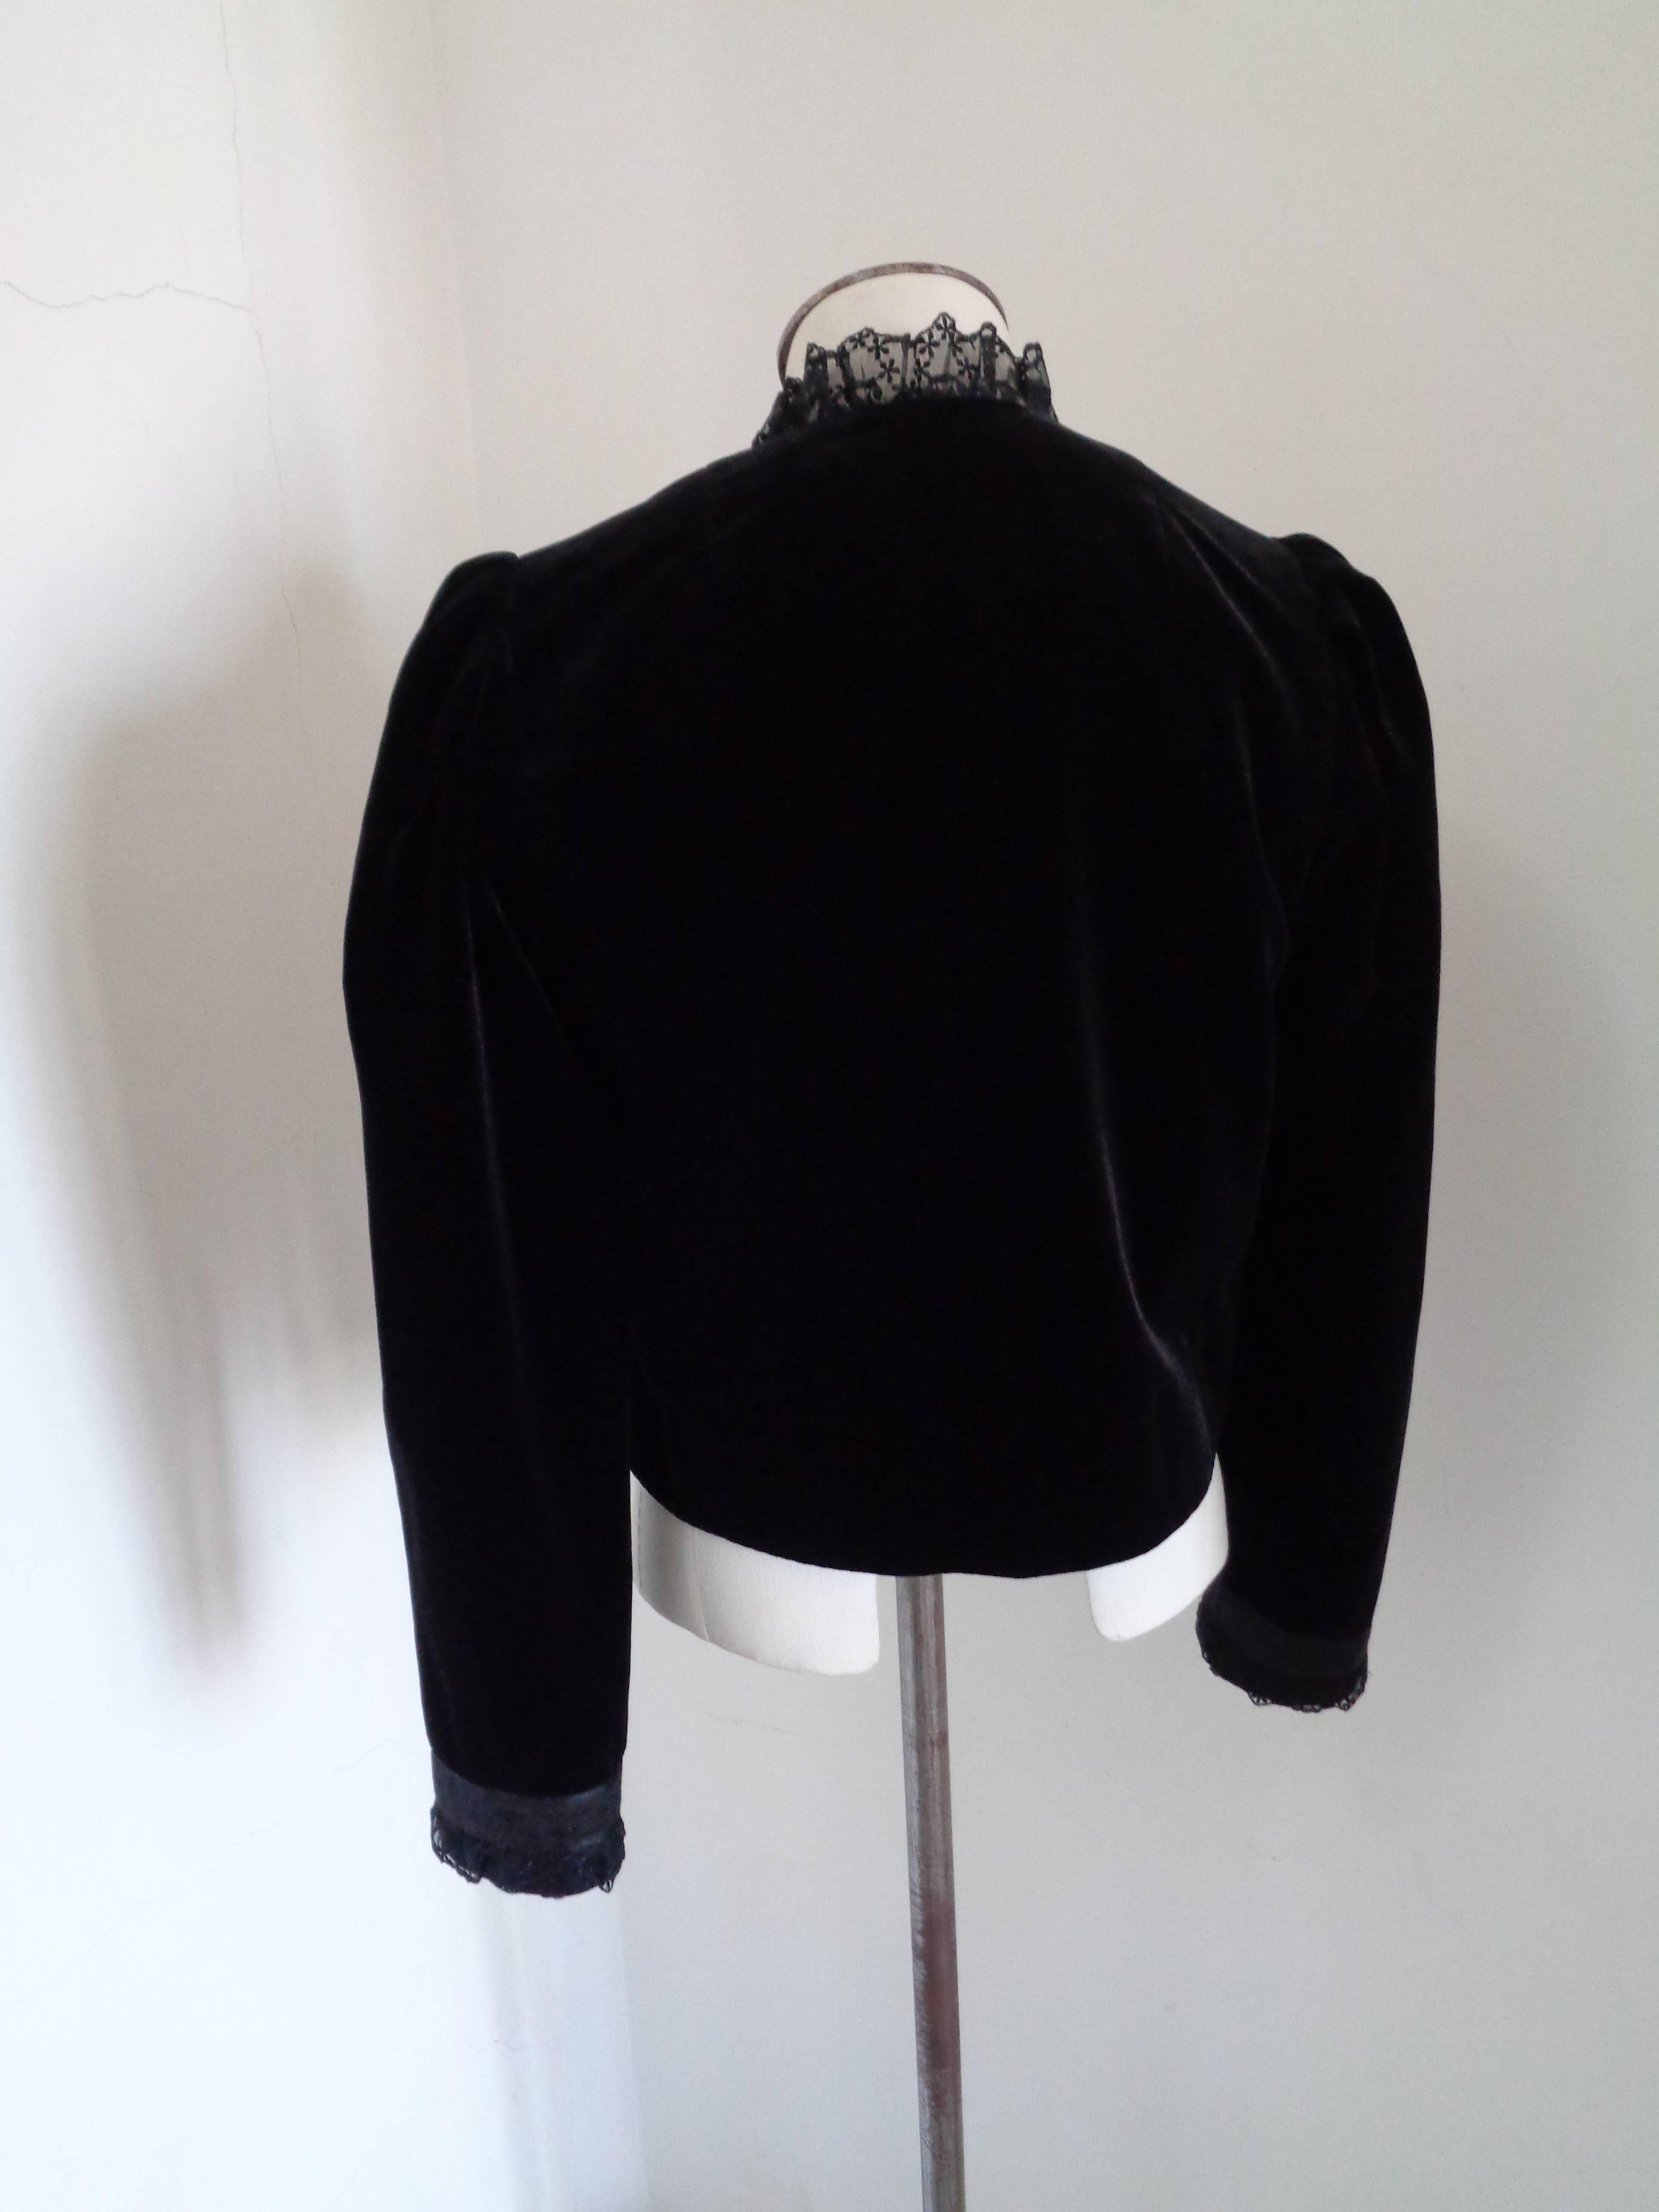 Krachten Kraft Collection Black Jacket In Excellent Condition For Sale In Capri, IT